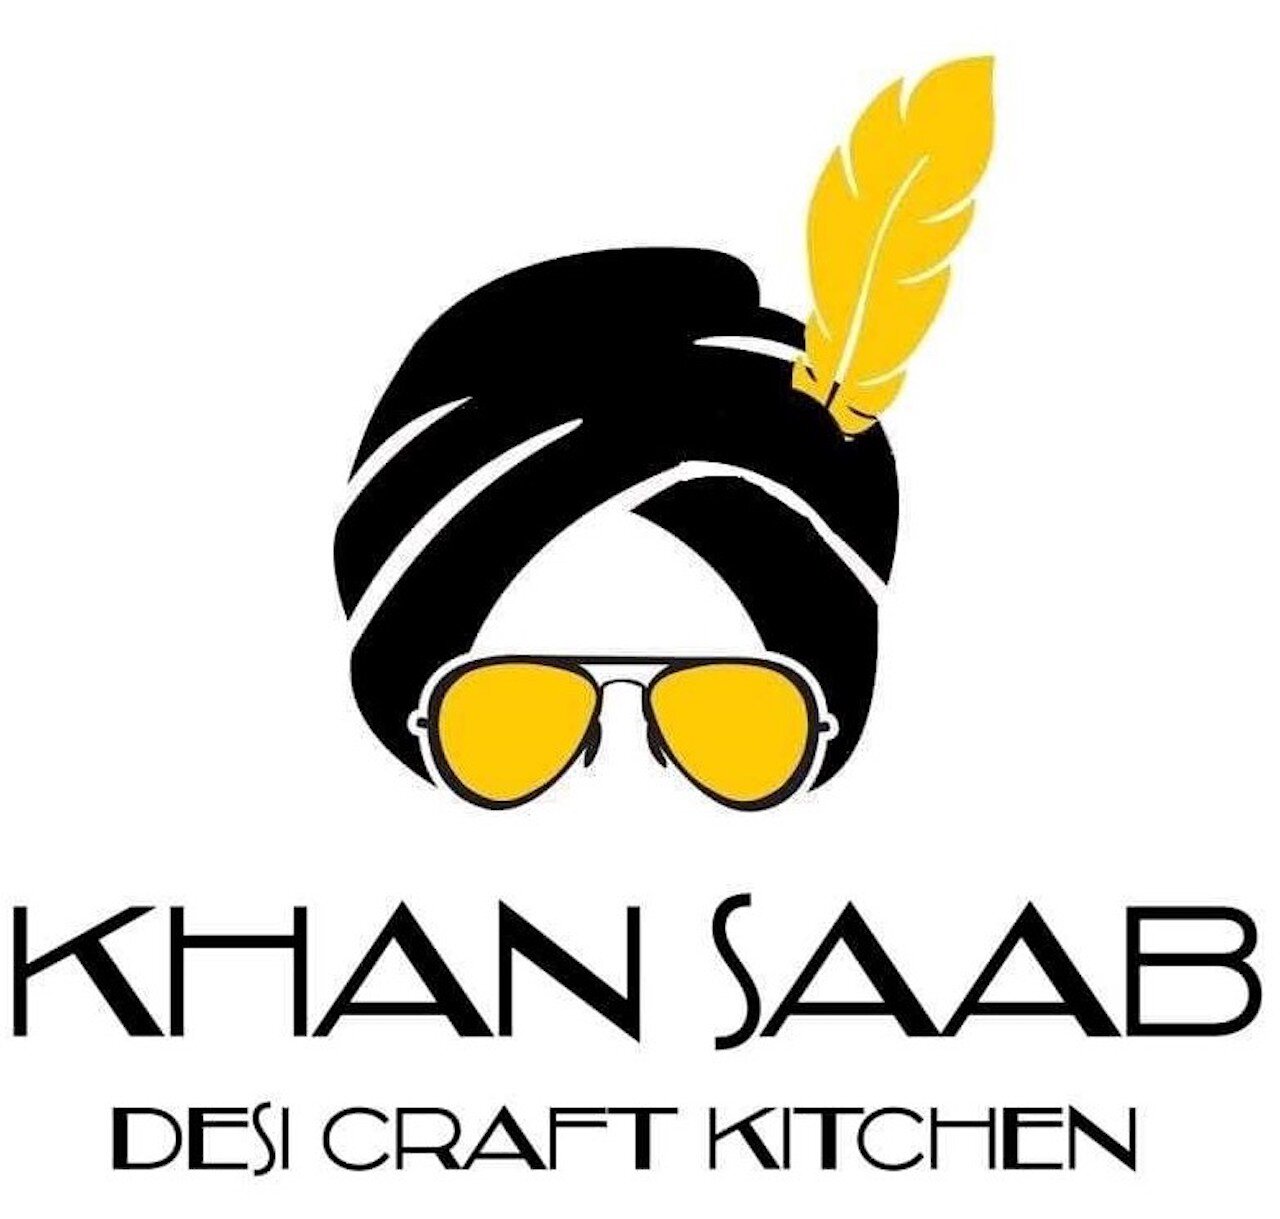 Khan Saab